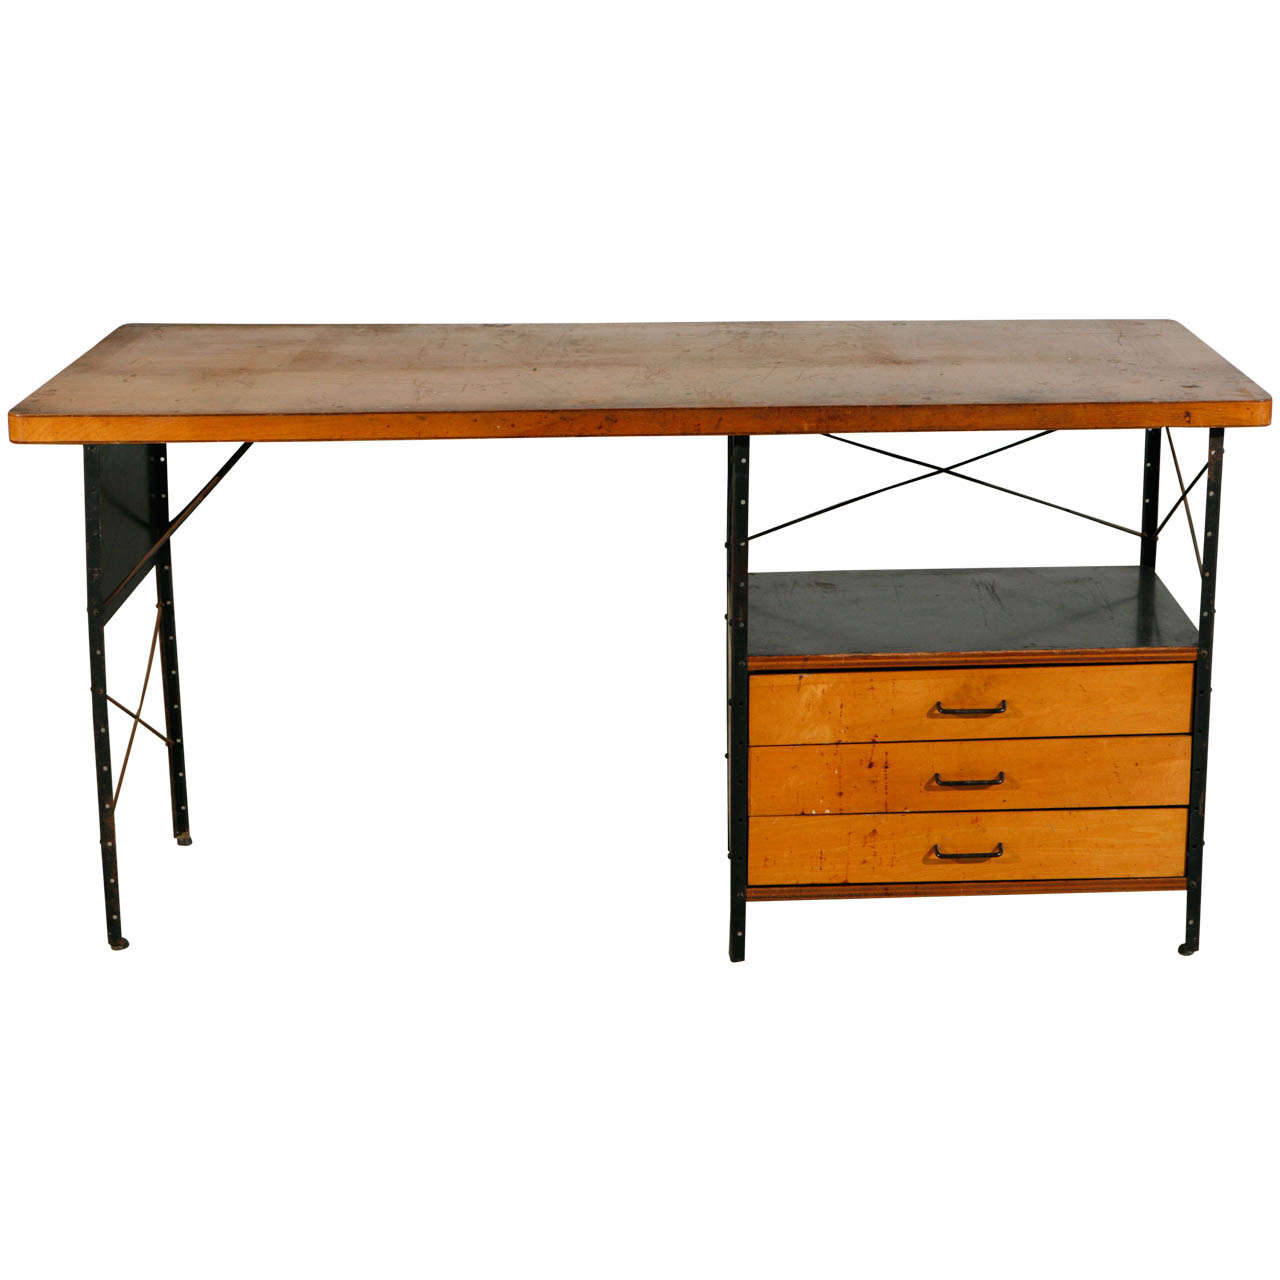 Charles Eames Desk By Herman Miller At 1stdibs